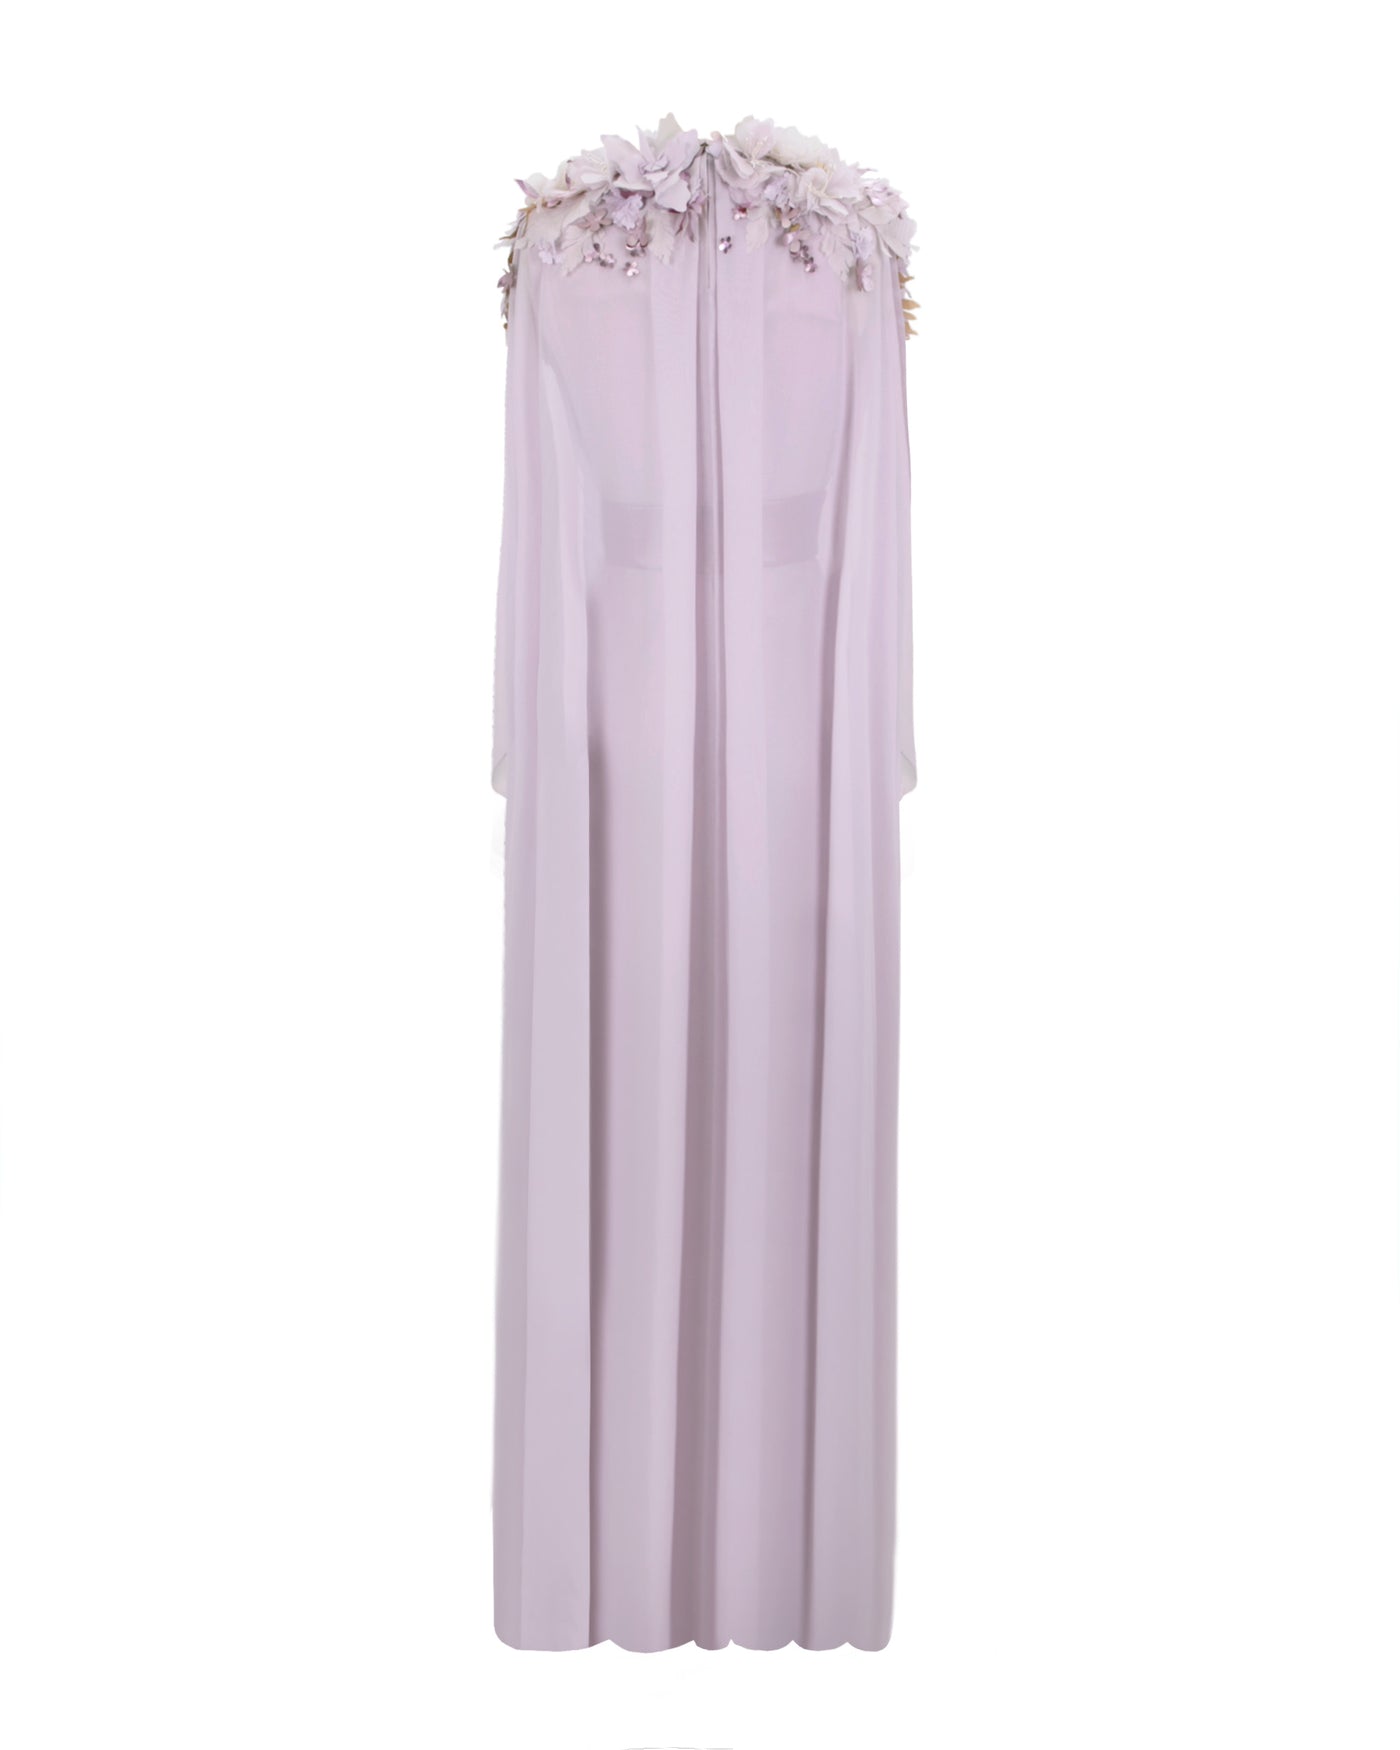 Loose Long Lilac Dress